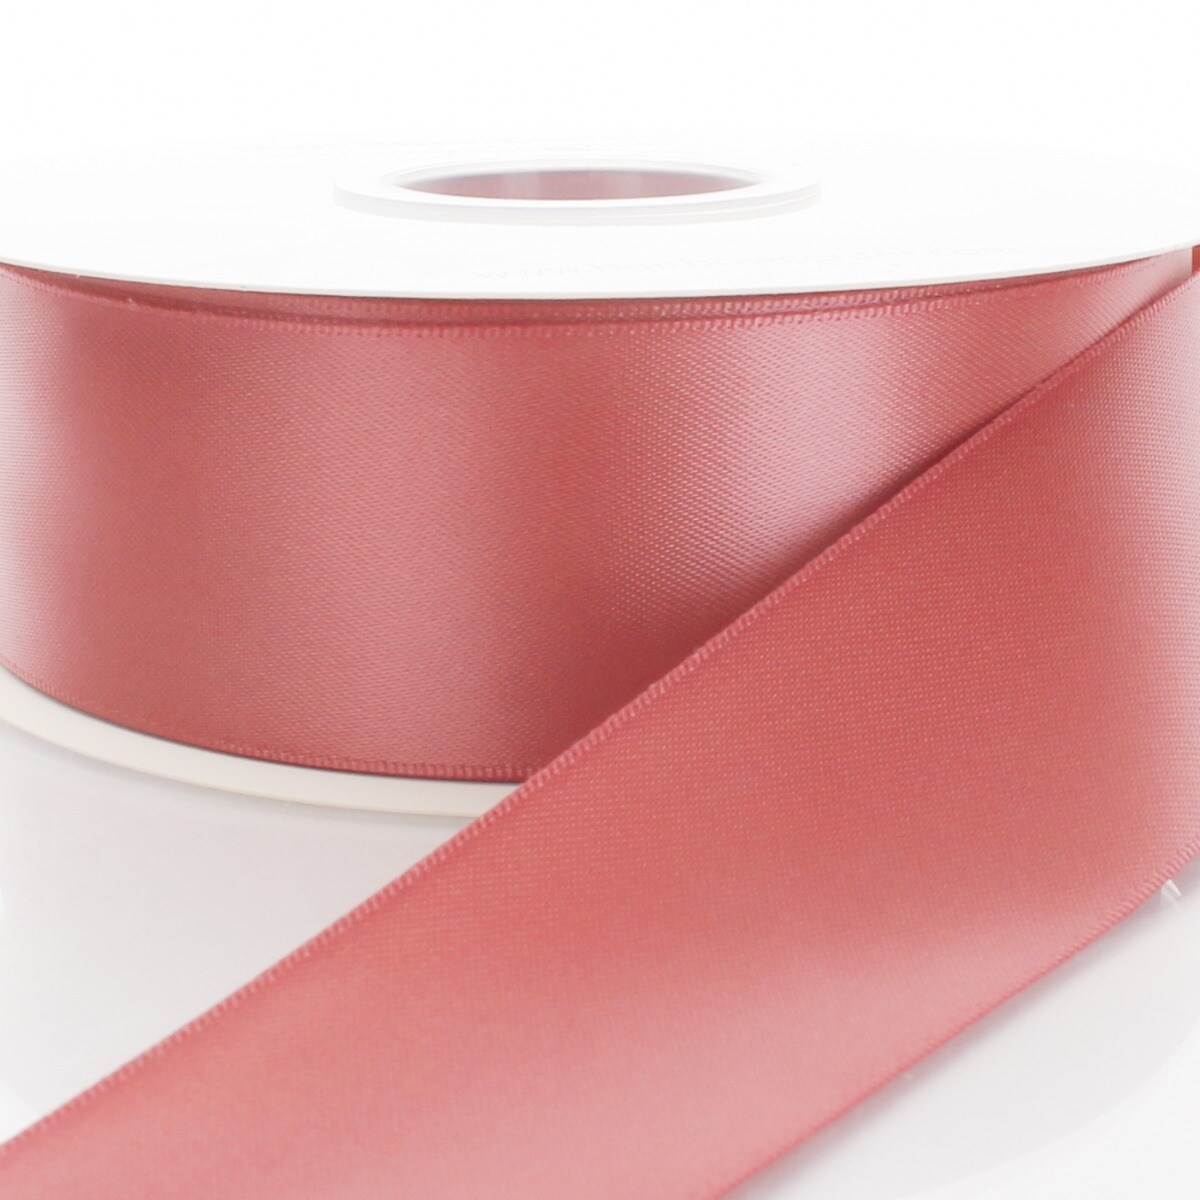 Hot pink double satin ribbon (20.05.20) - Art From Italy